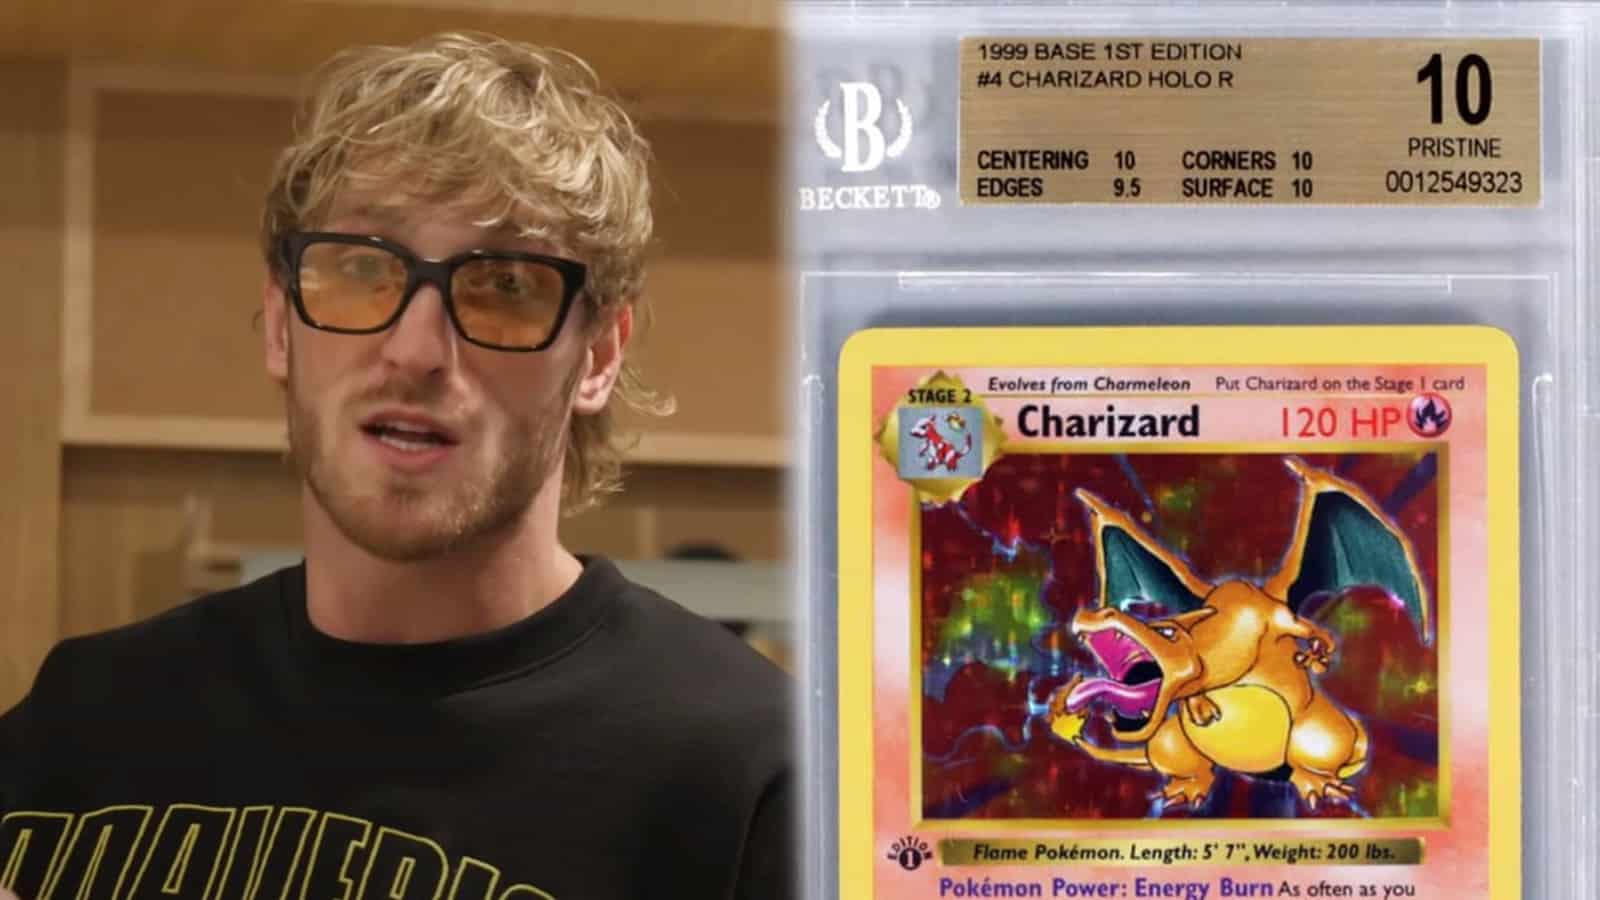 YouTuber Logan Paul next to Charizard Pokemon card